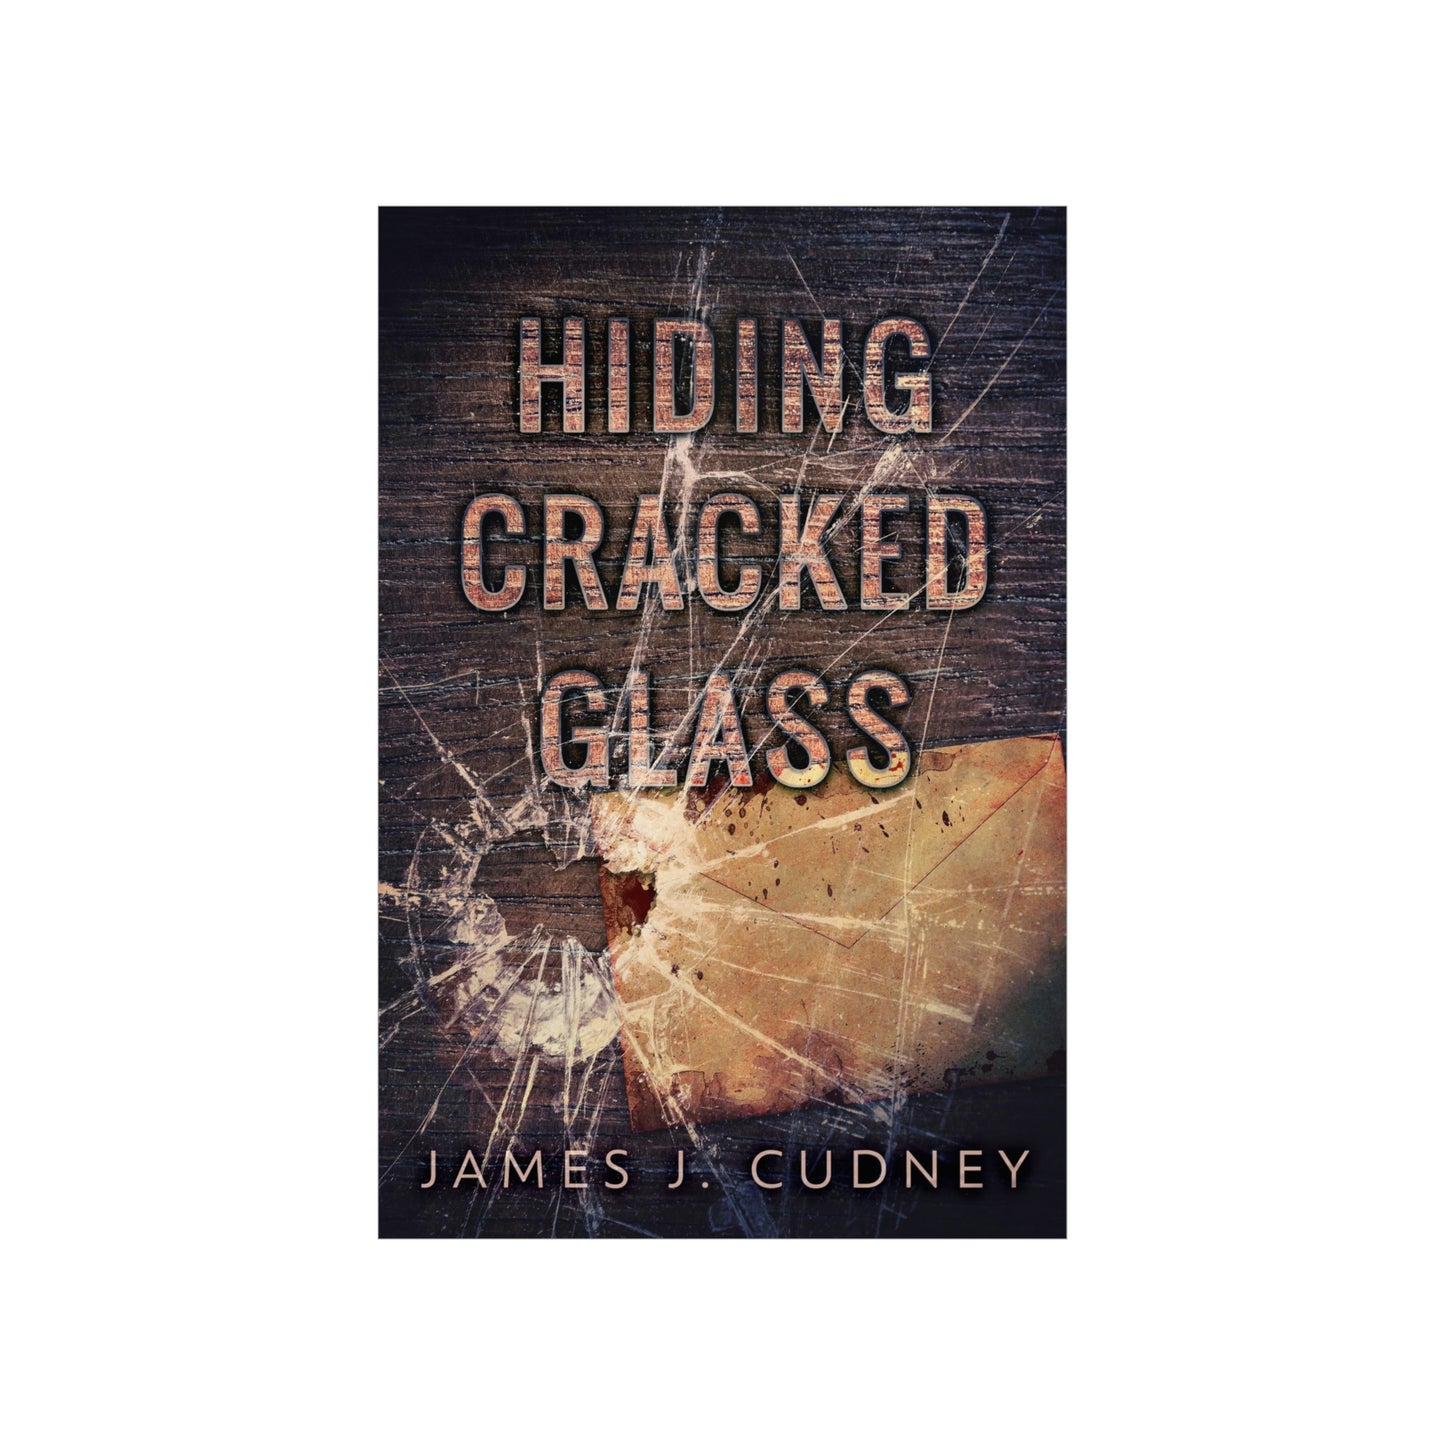 Hiding Cracked Glass - Matte Poster